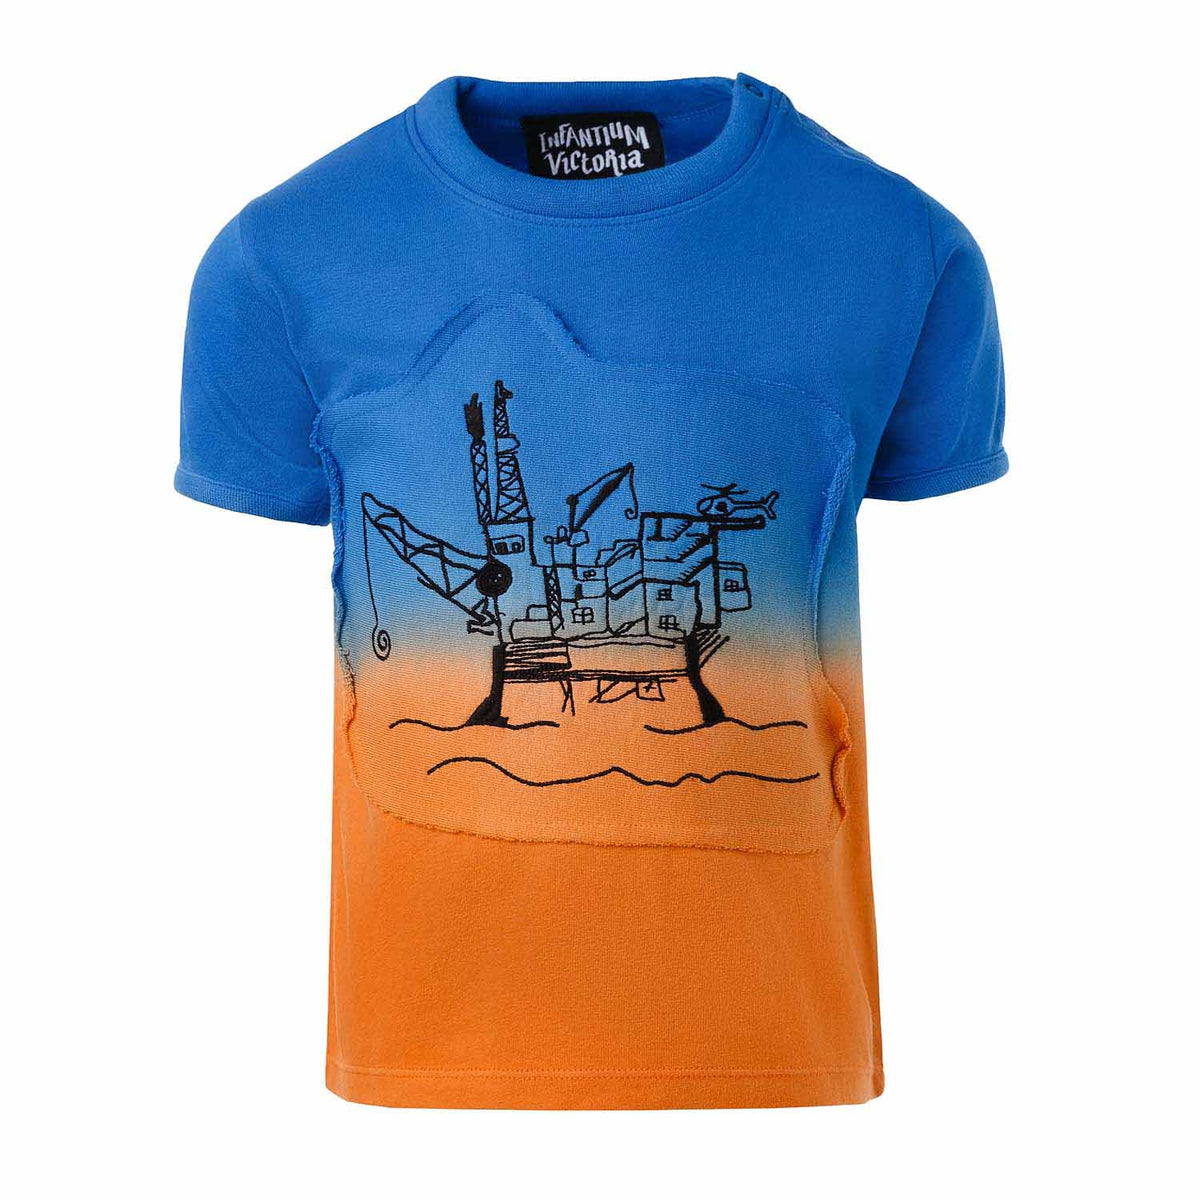 Dip Dye T-Shirt with Oil Rig - Infantium Victoria